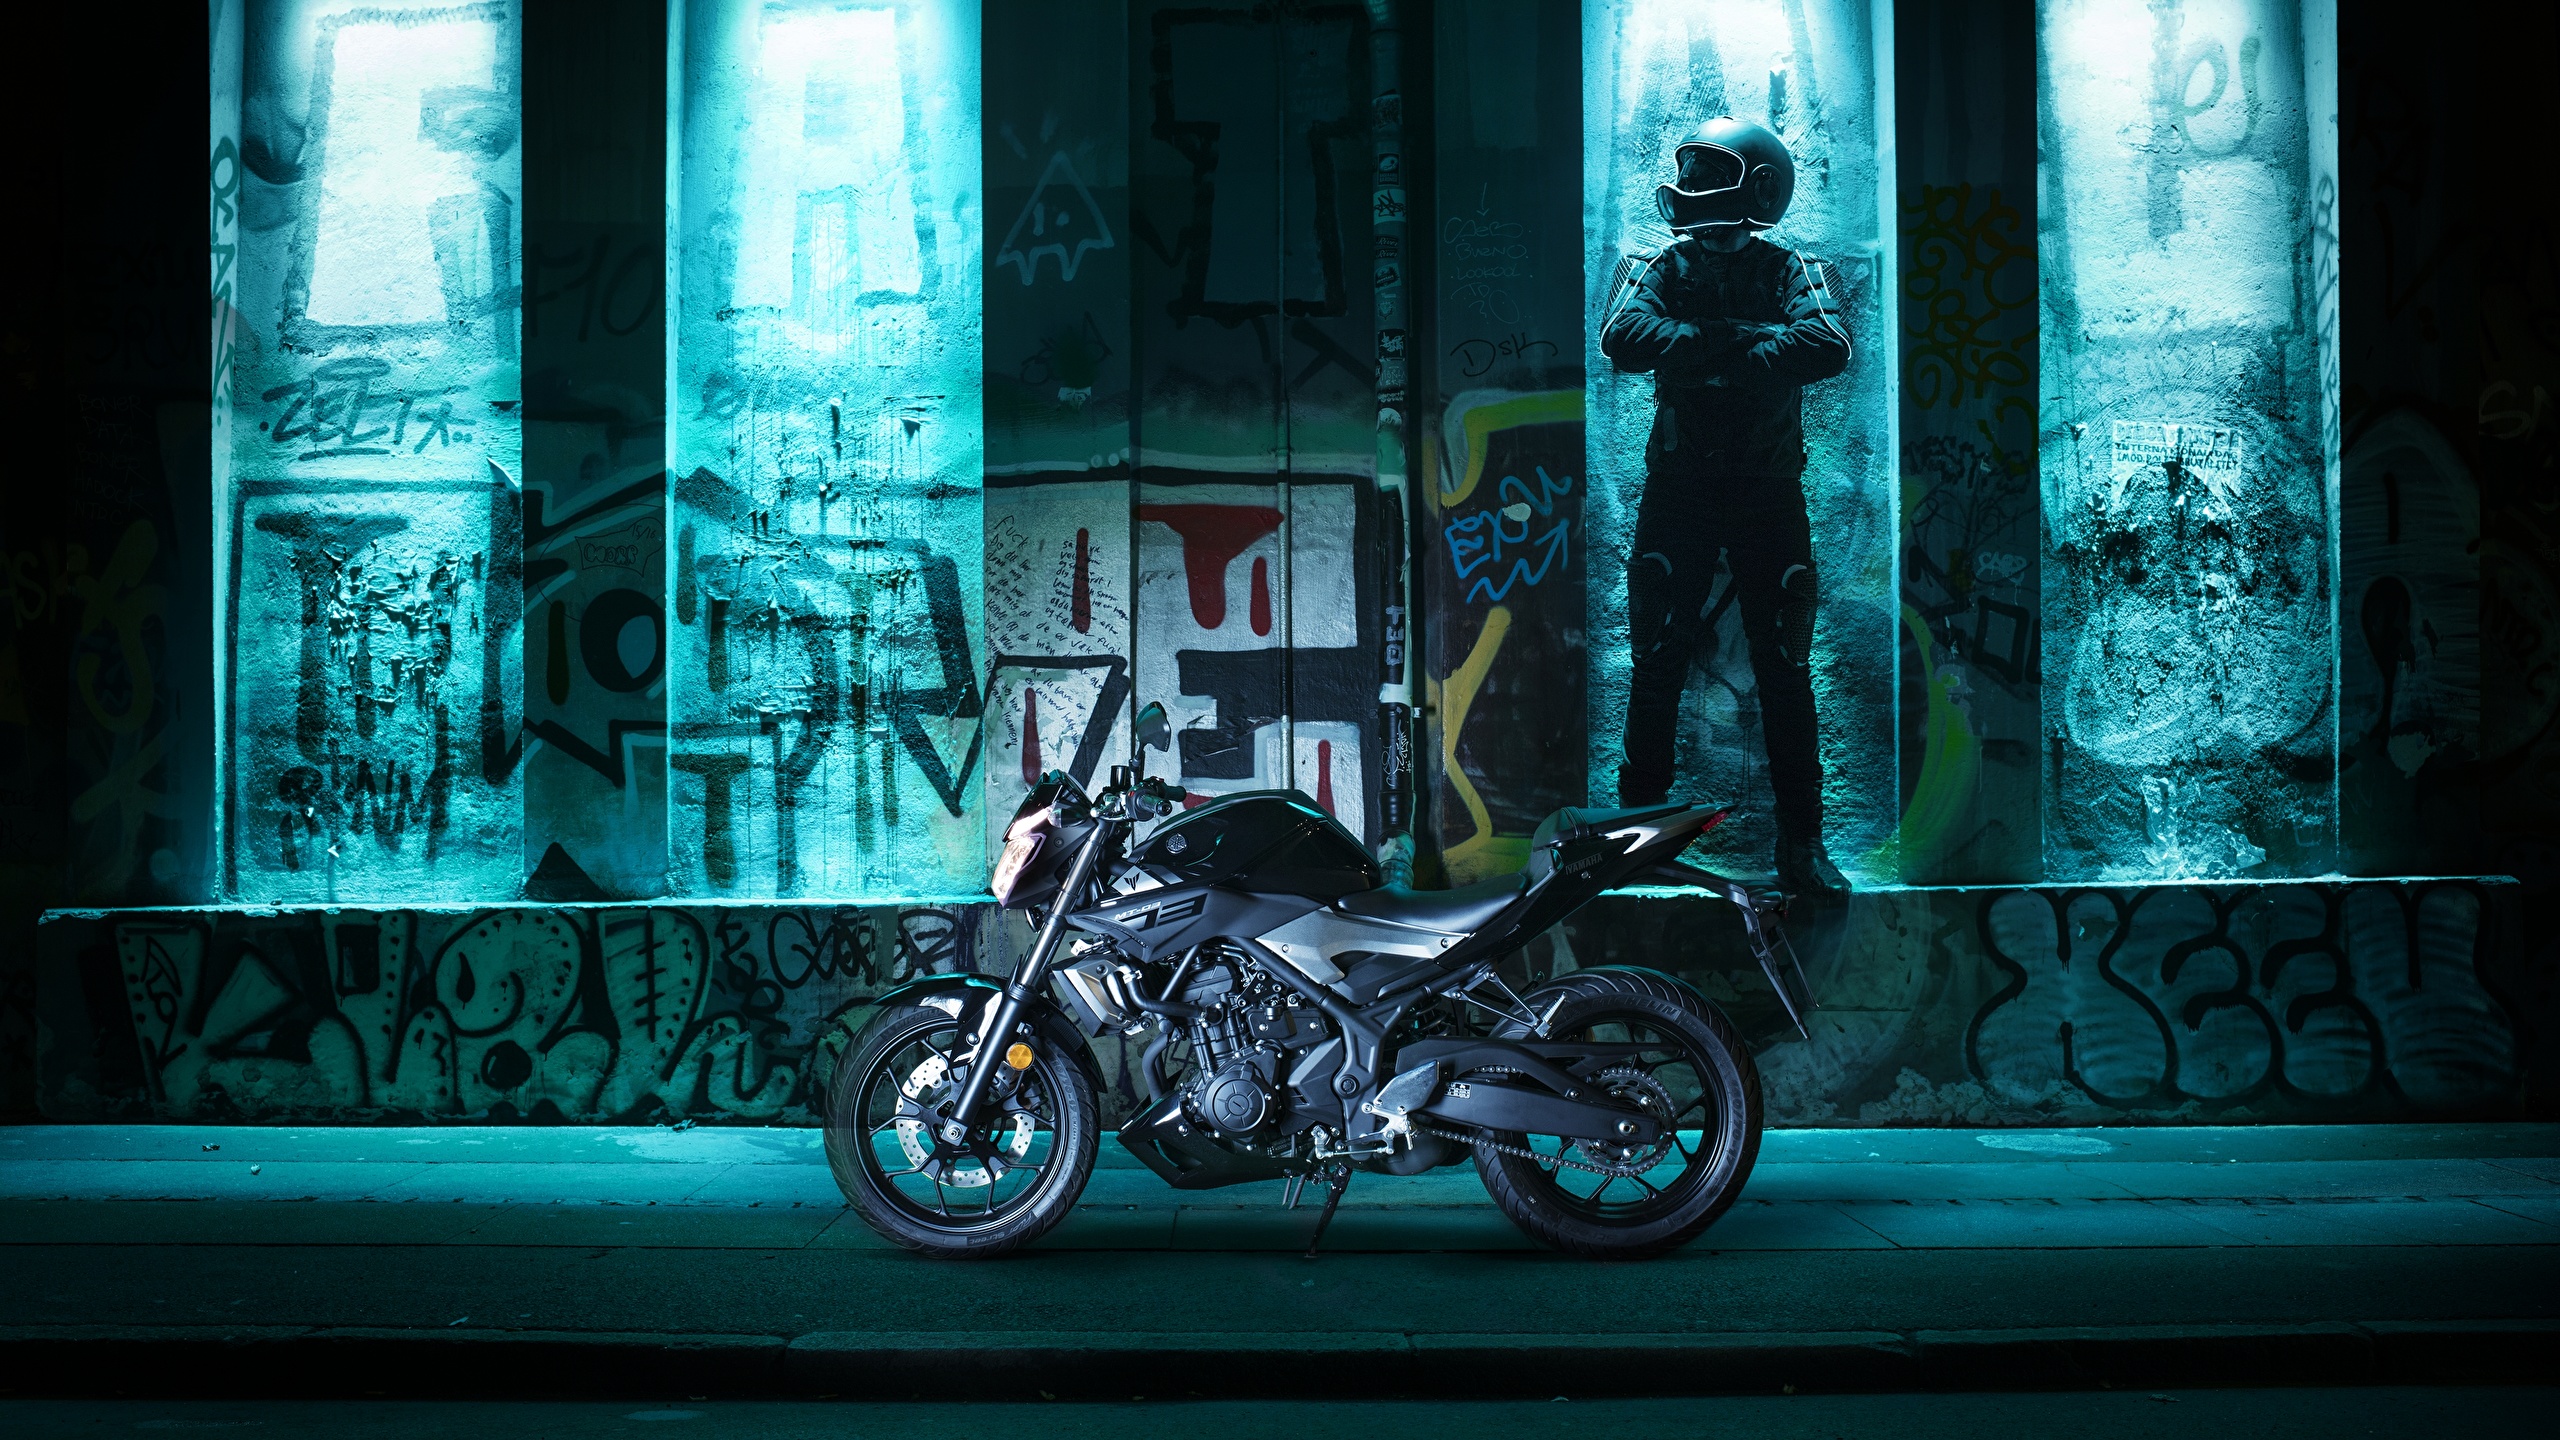 2560 X - Yamaha Mt 03 , HD Wallpaper & Backgrounds